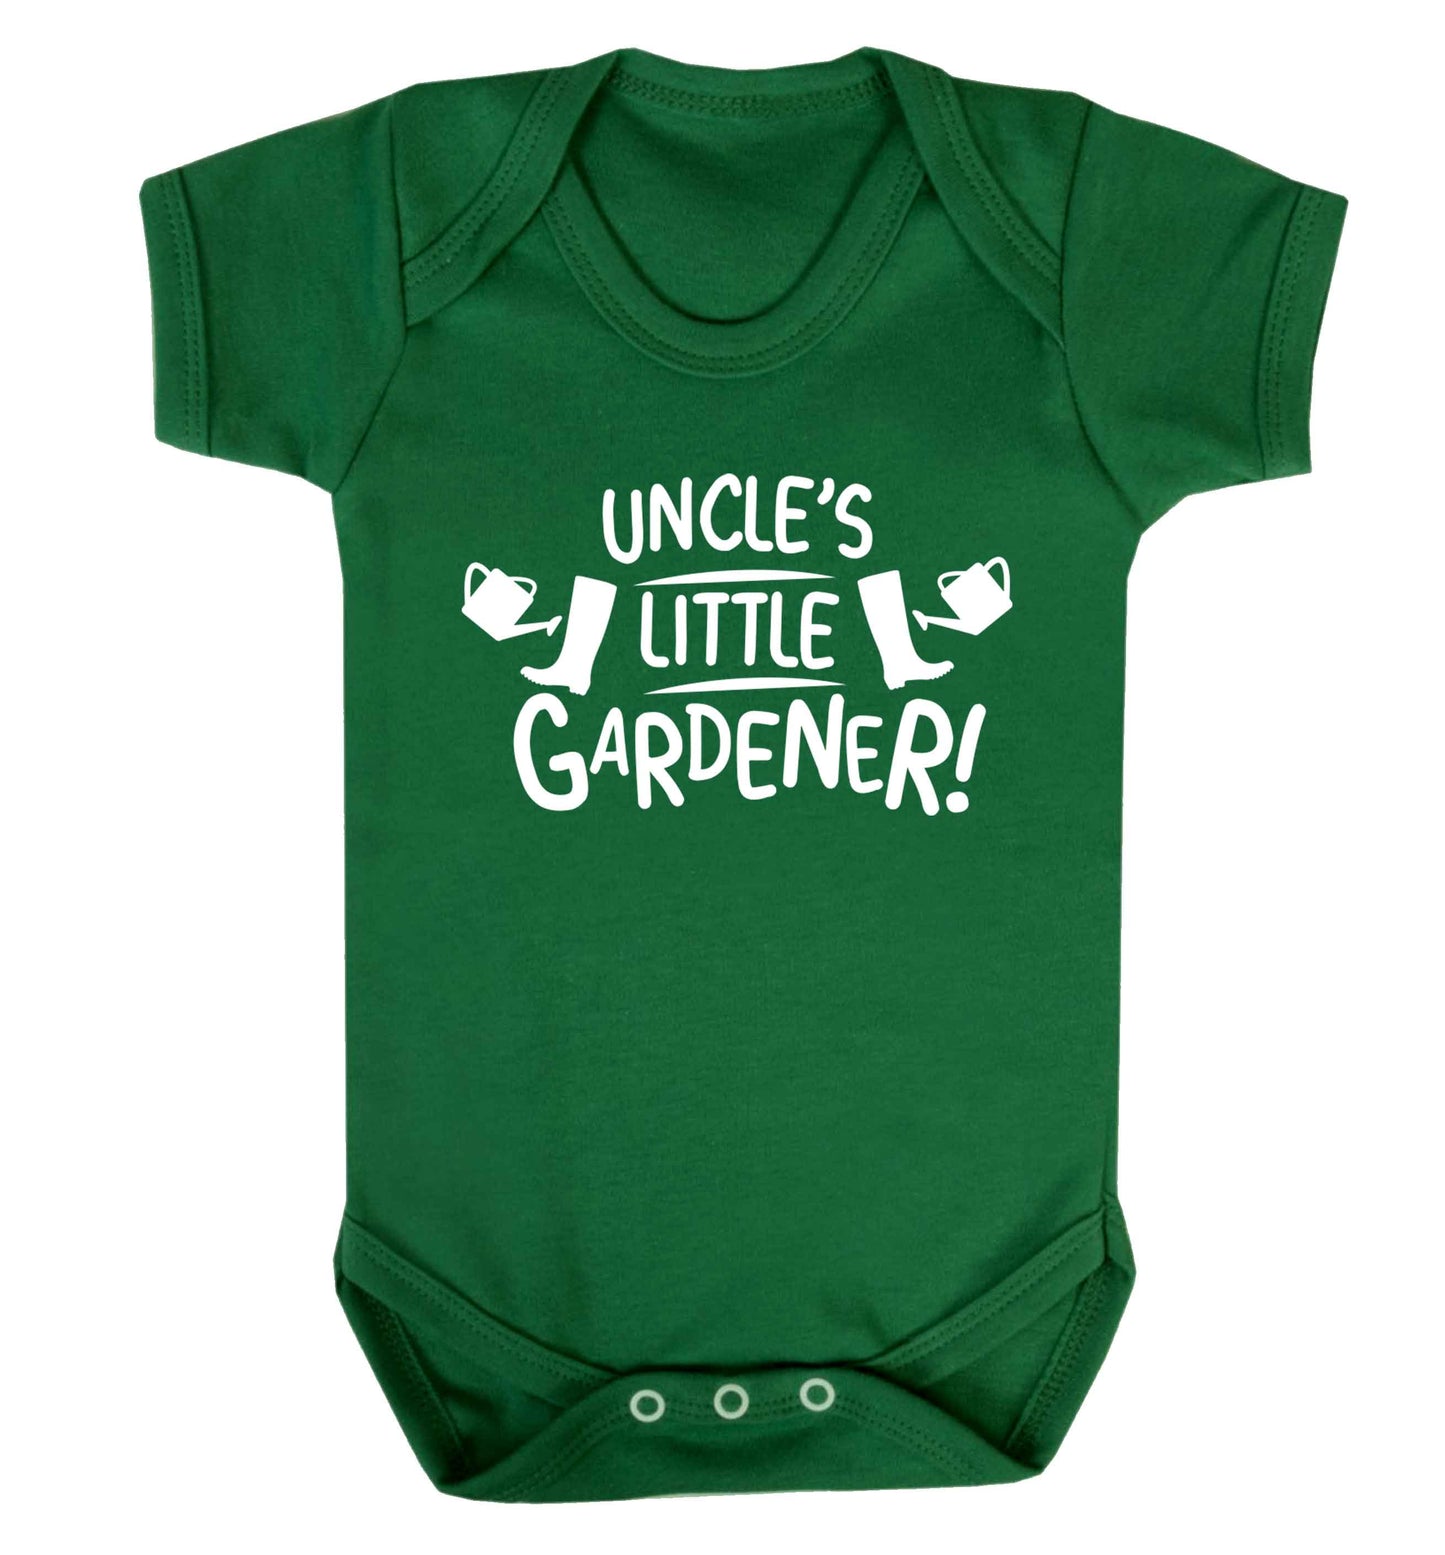 Uncle's little gardener Baby Vest green 18-24 months